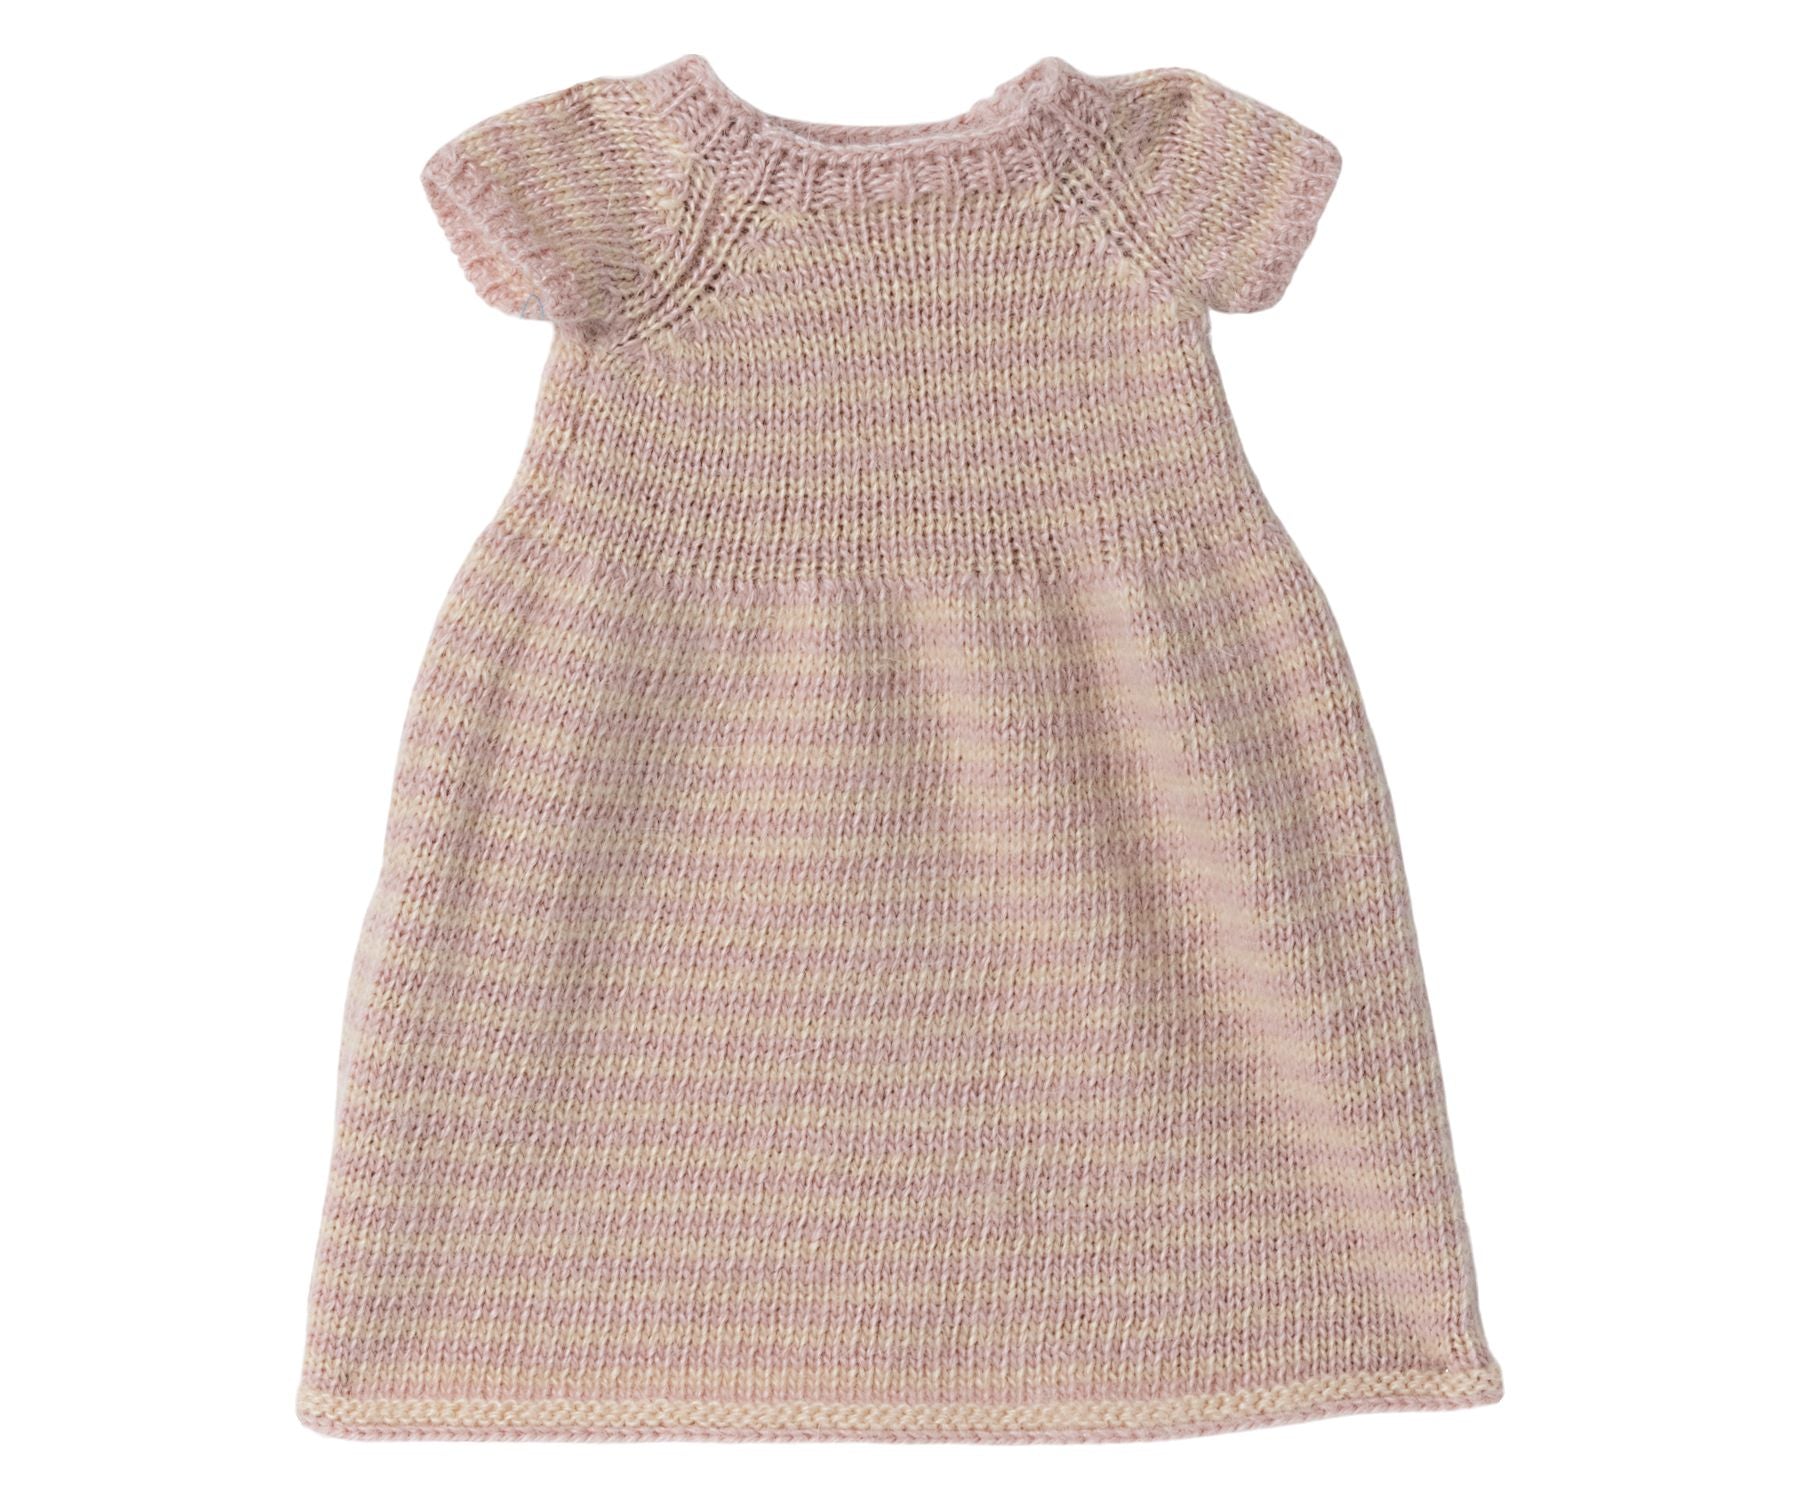 2022 Maileg Knitted Dress-Size 4, Pink Stripe